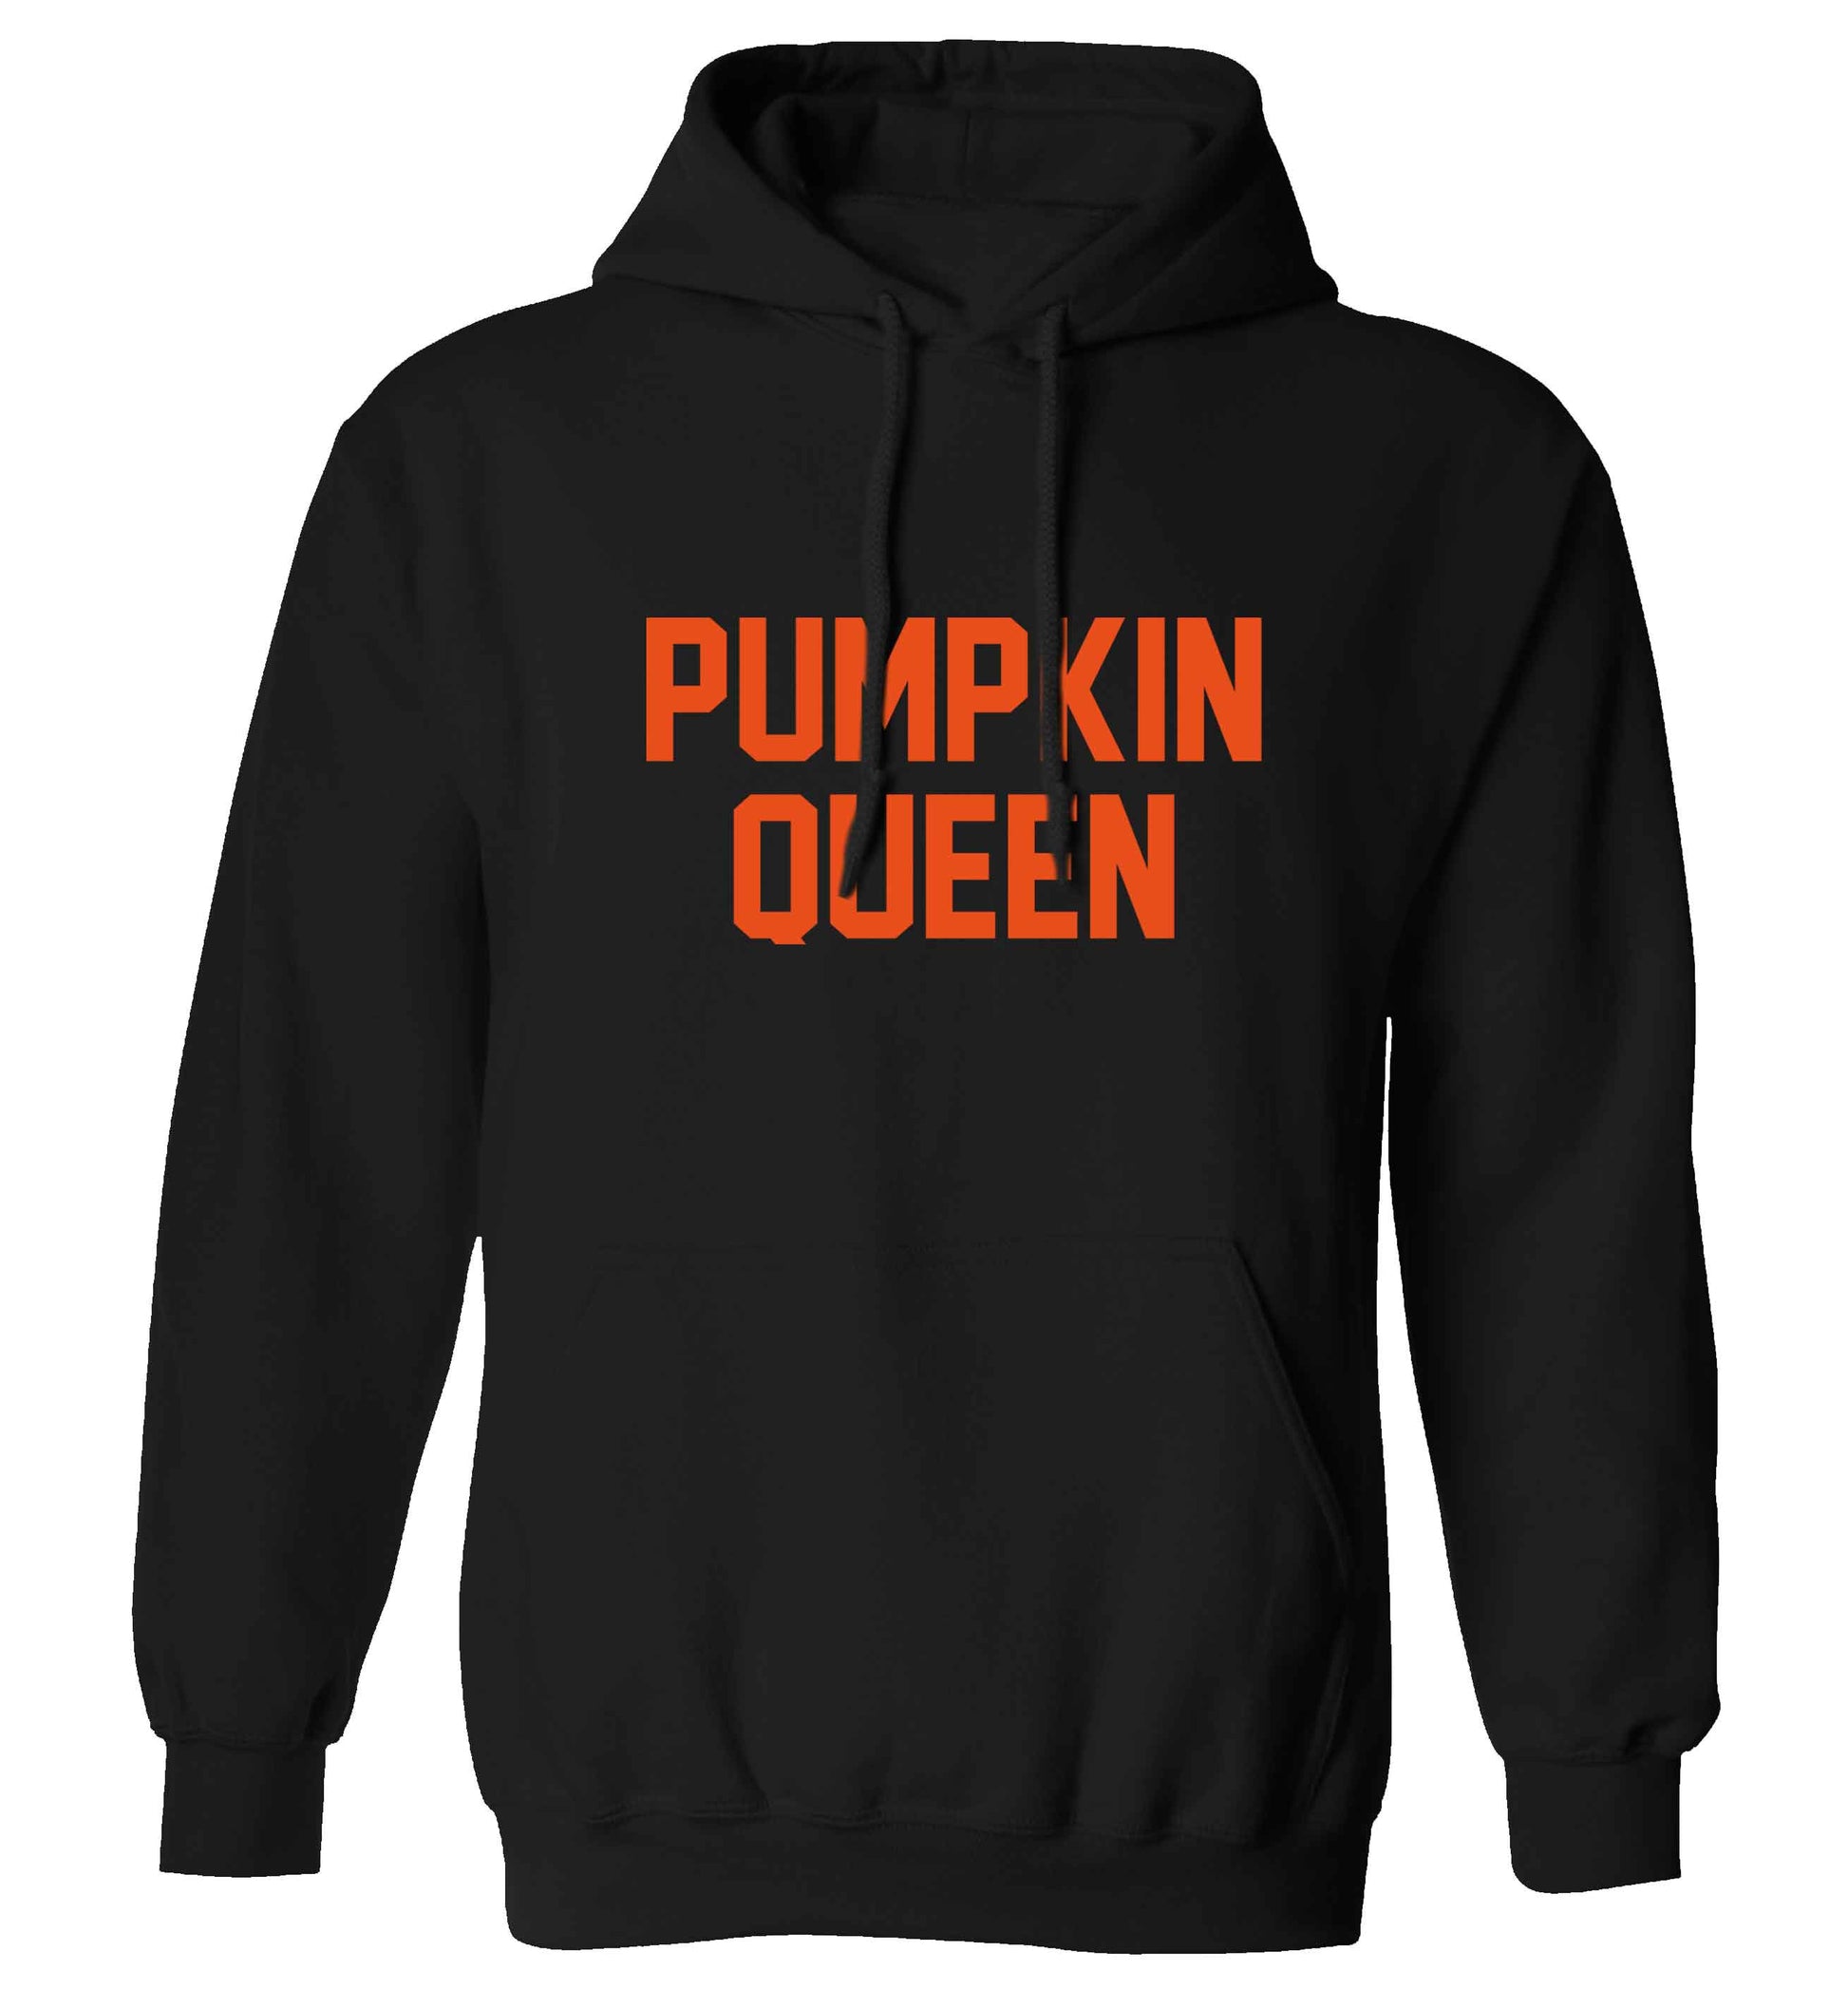 Pumpkin Queen adults unisex black hoodie 2XL